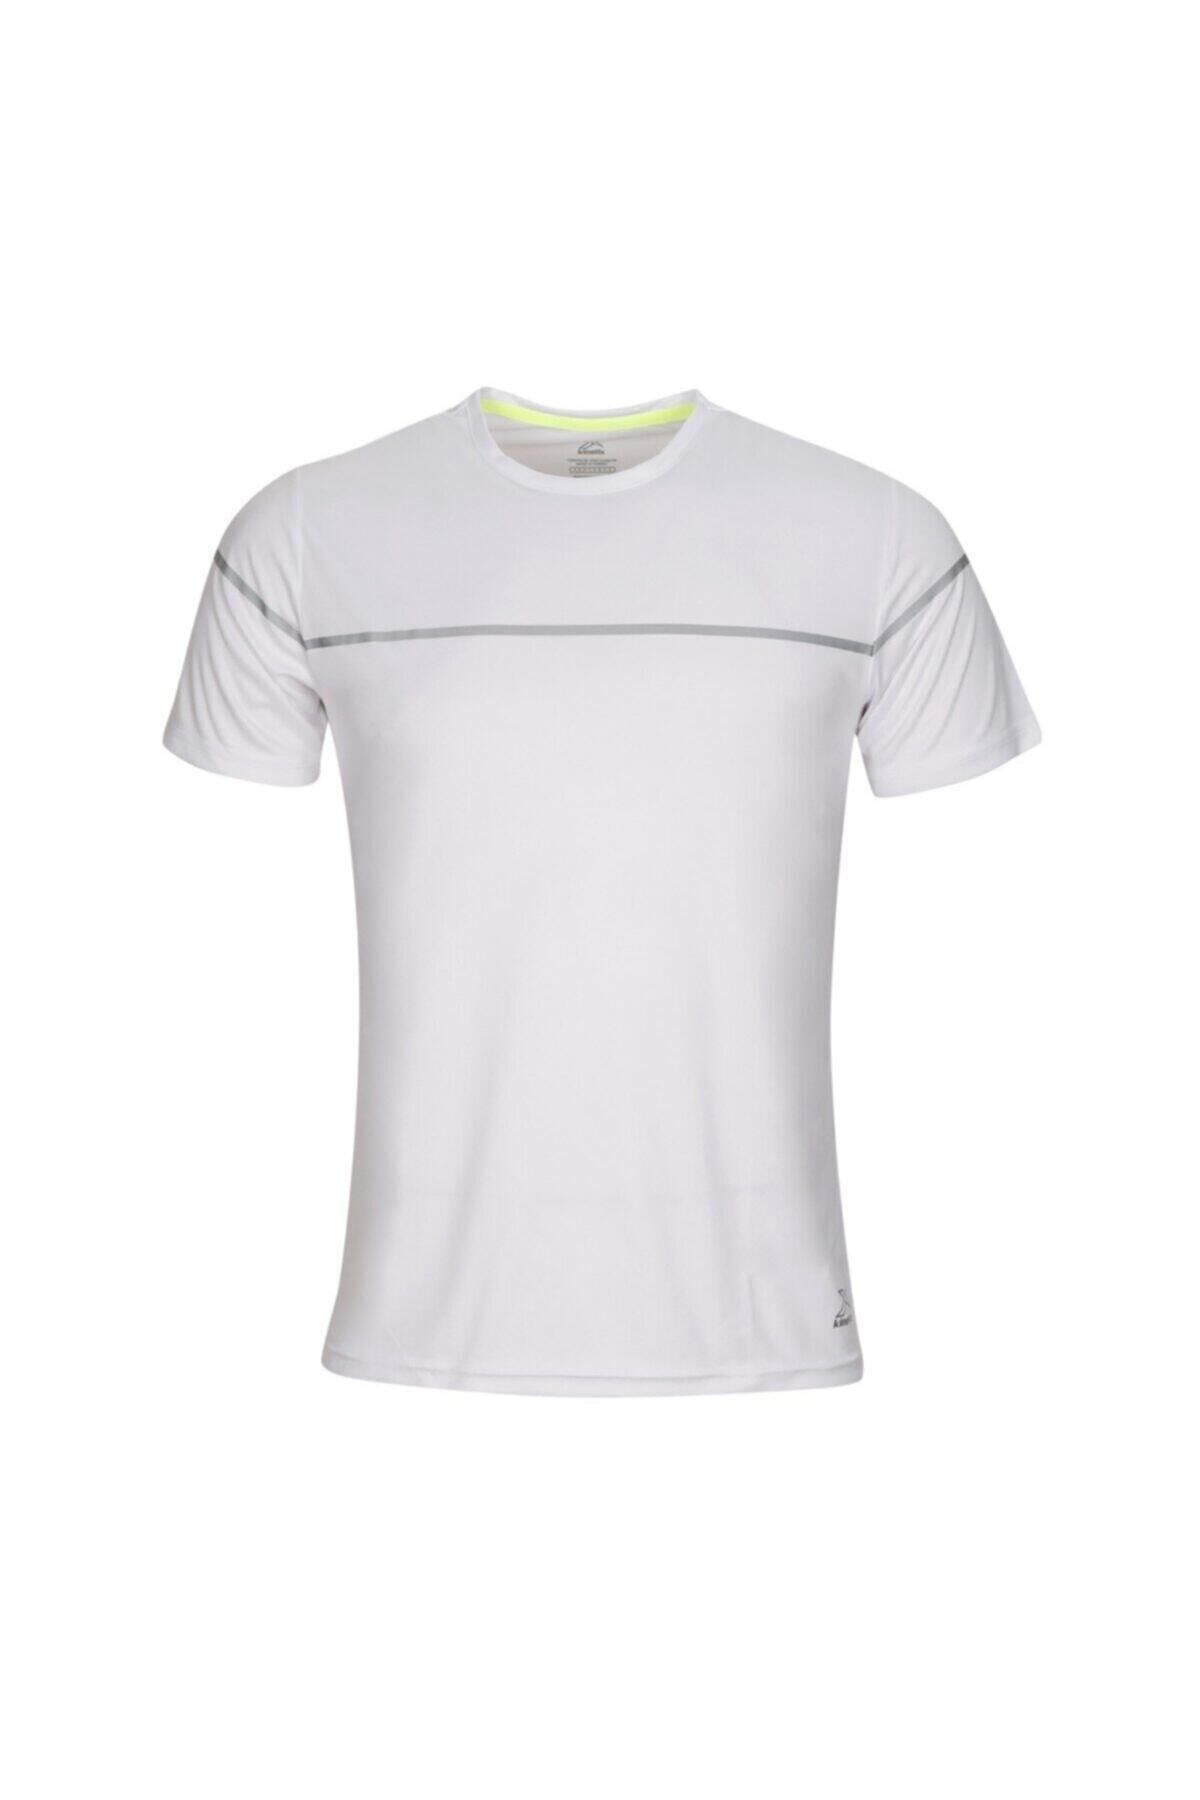 Kinetix LANDER T-SHIRT Beyaz Erkek T-Shirt 100933000